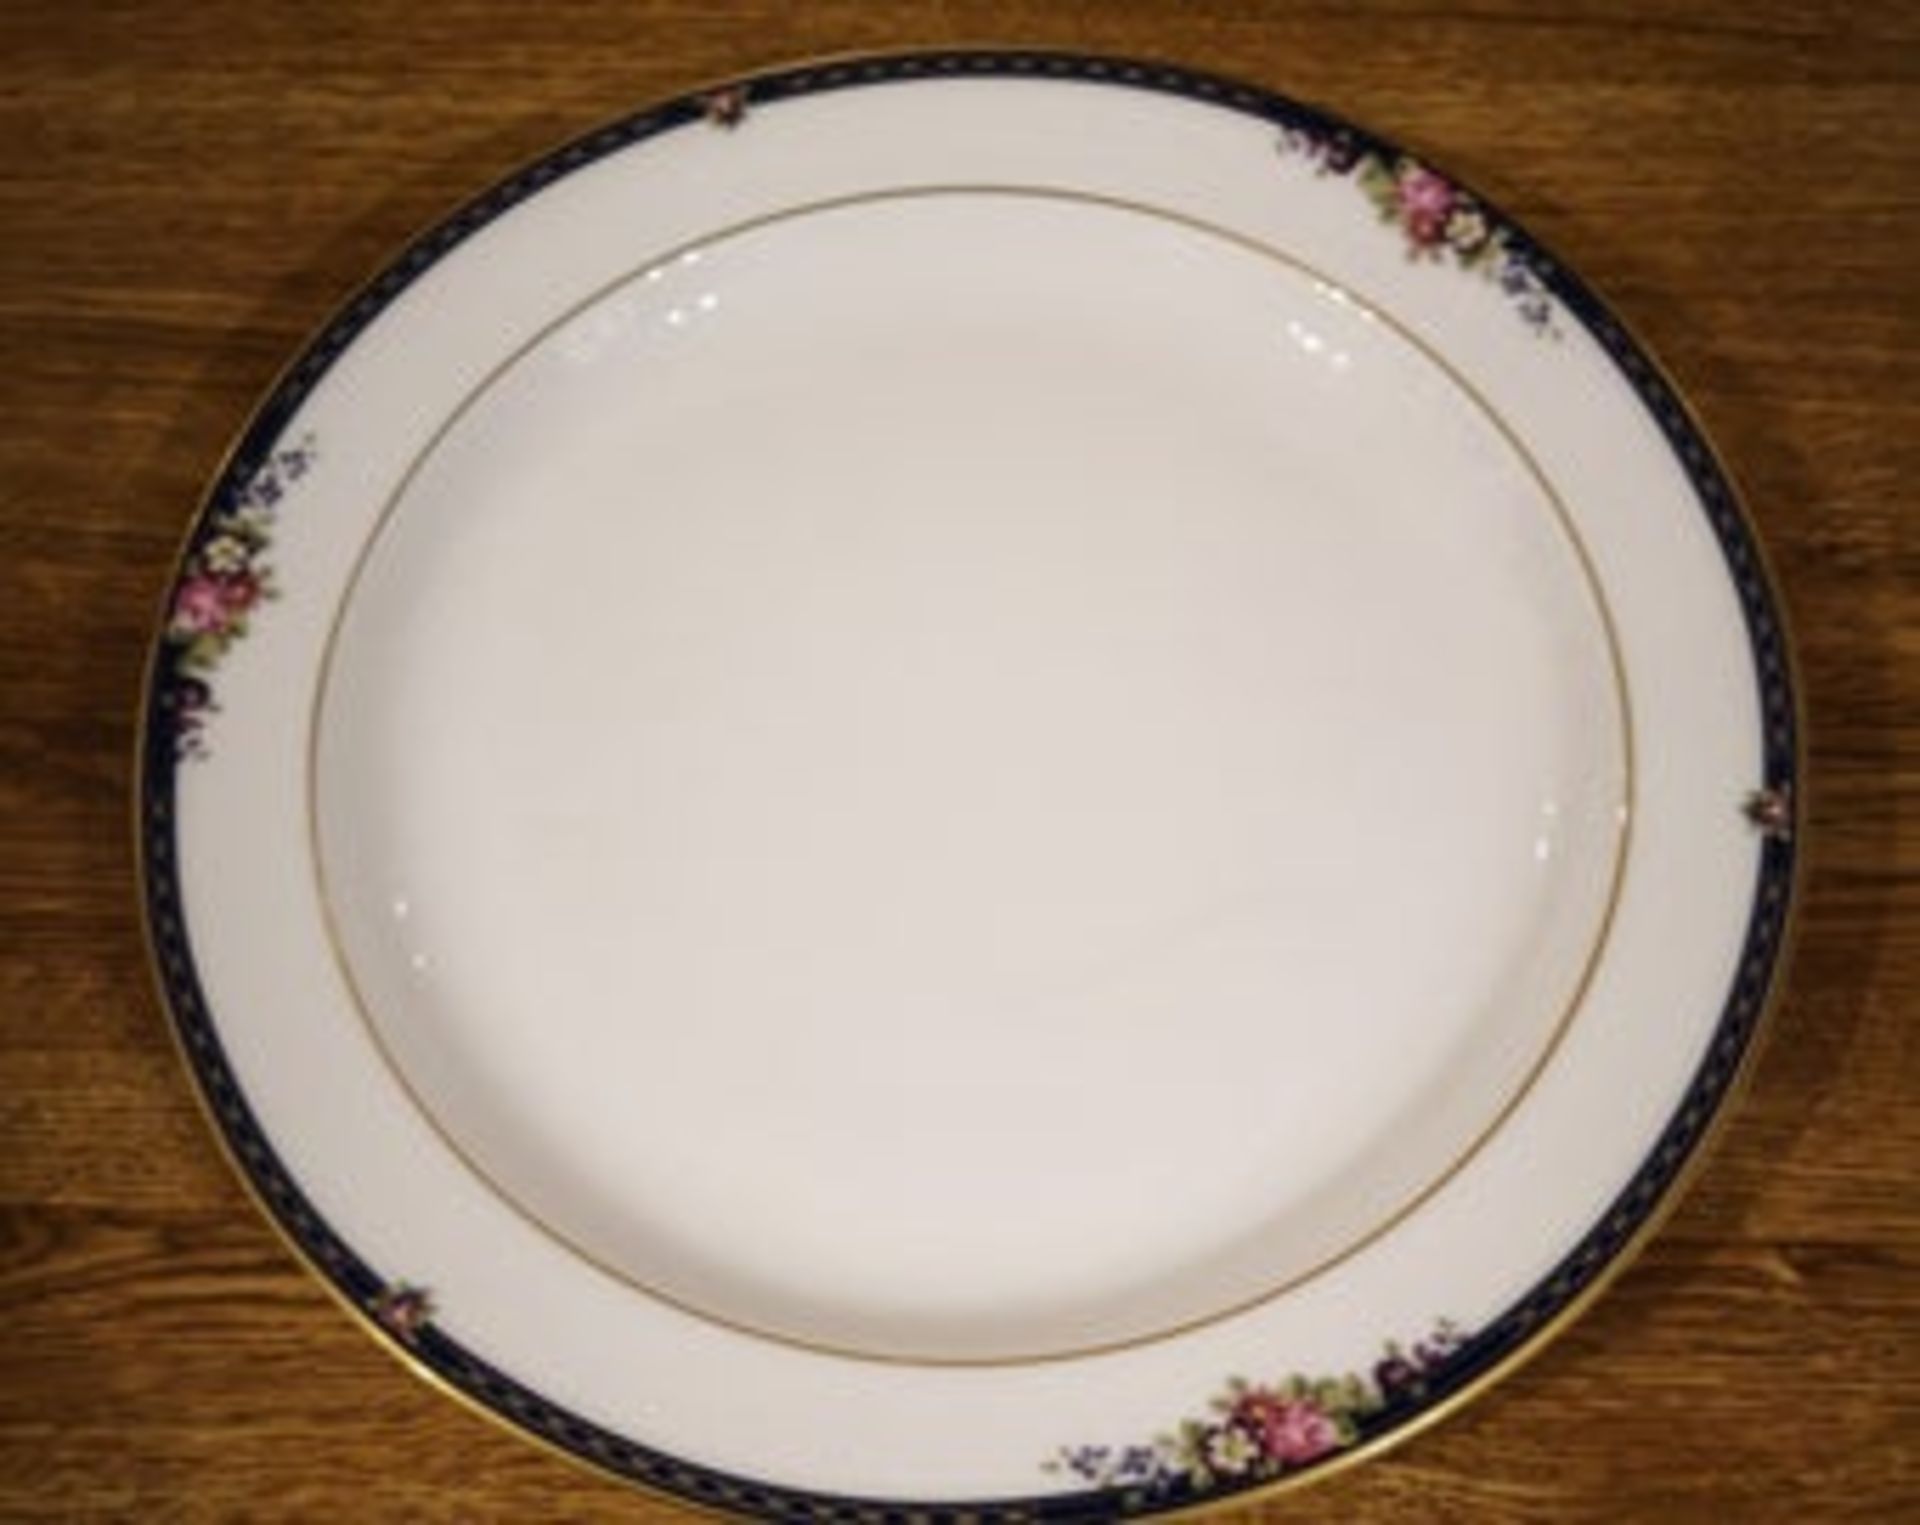 Royal Doulton large serving plate Centennial Rose pattern - Image 3 of 4